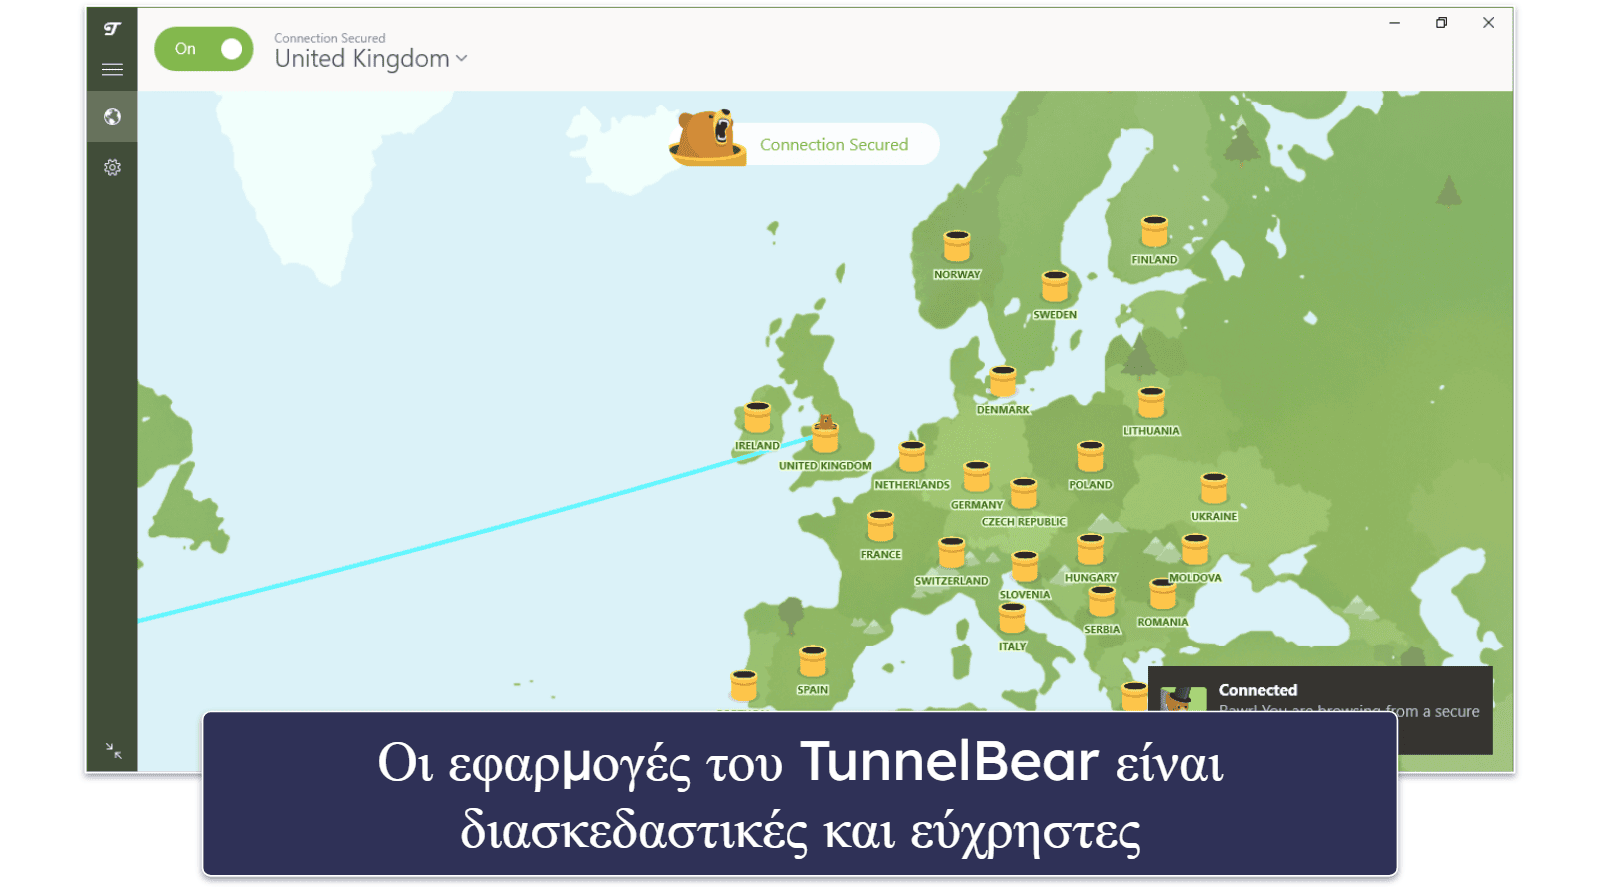 7. TunnelBear — Πολύ καλό δωρεάν VPN για νέους χρήστες